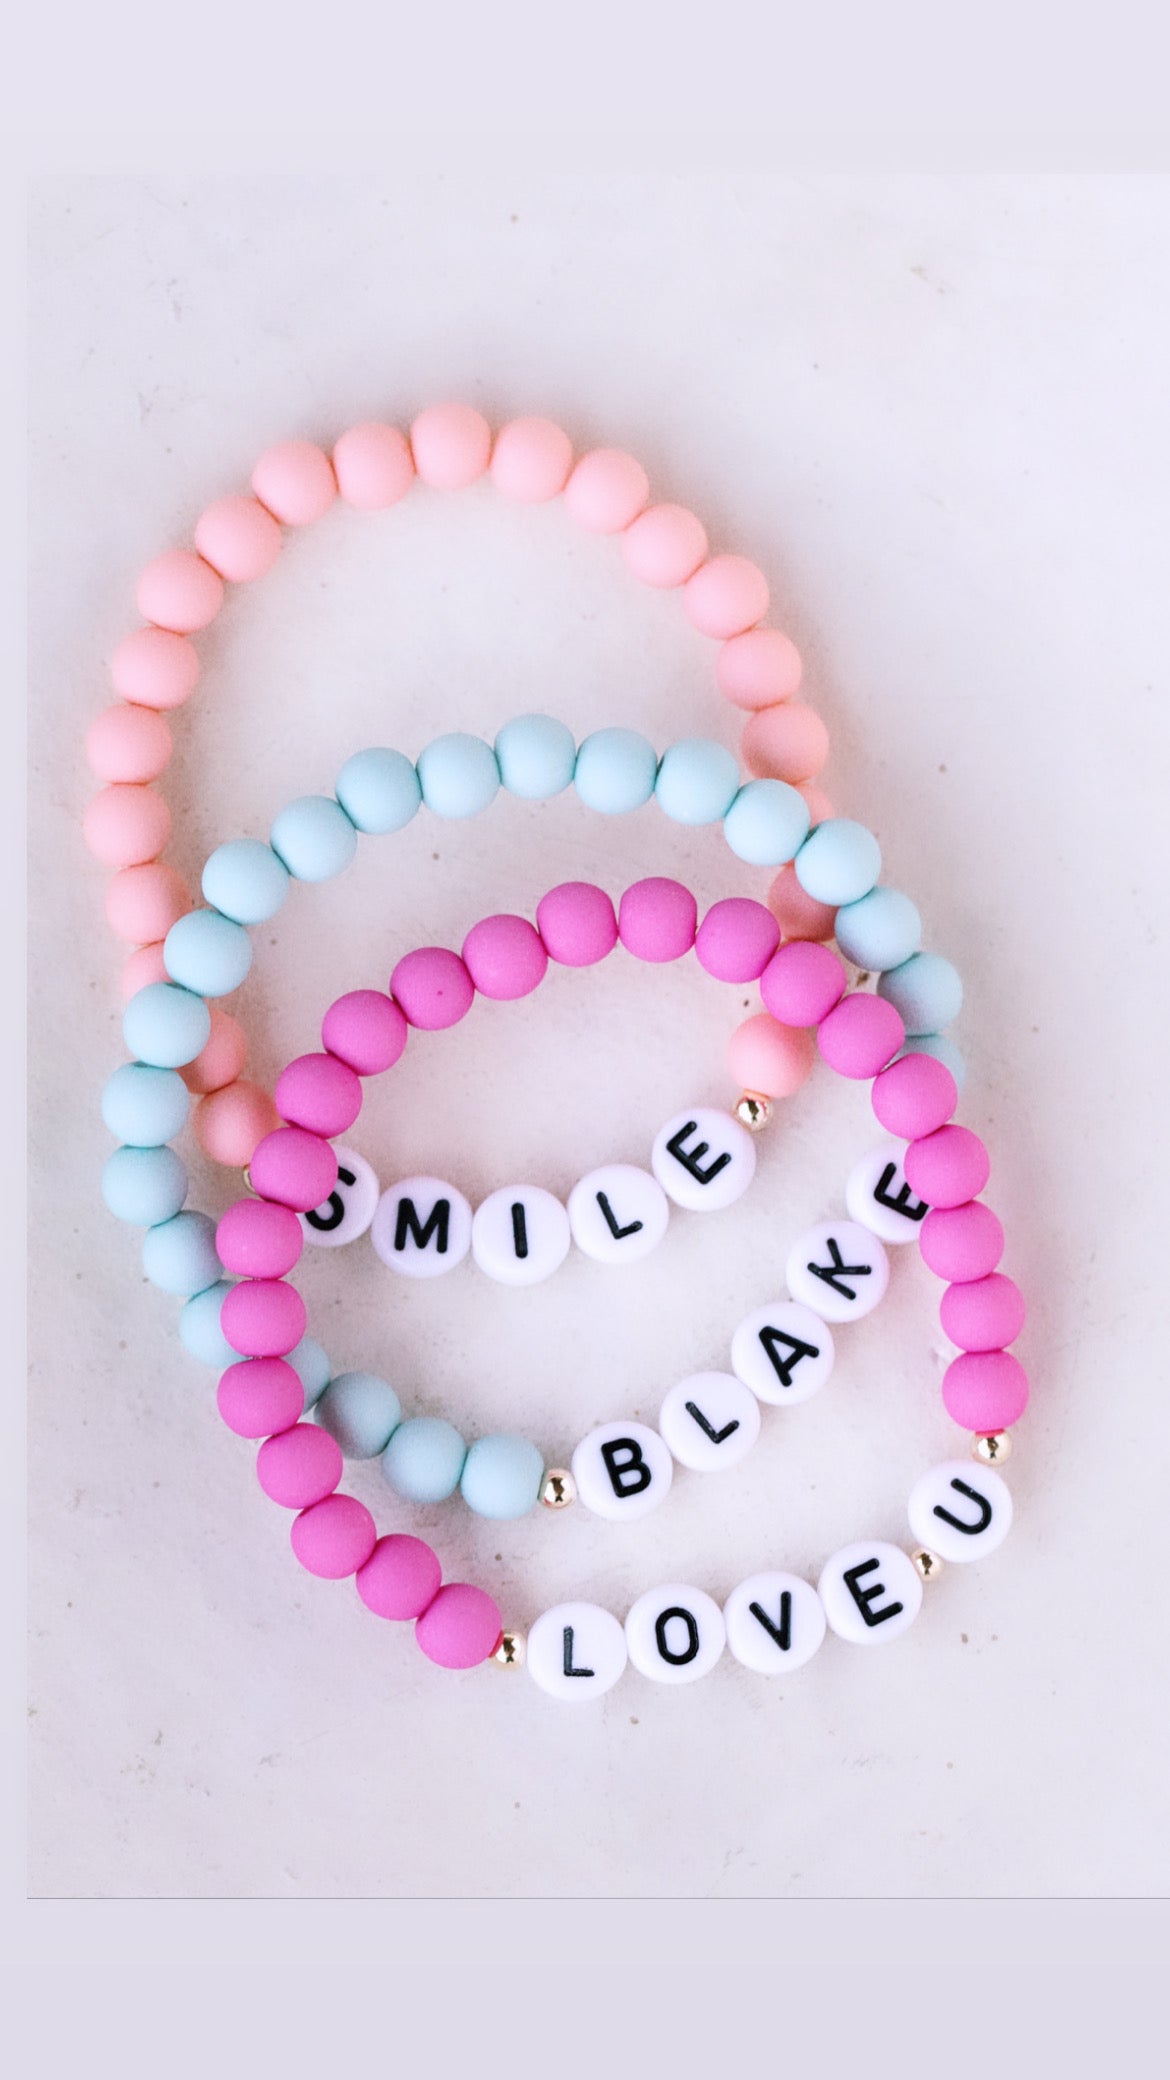 Neon Pink Glass Beads Bracelet By Hidayat